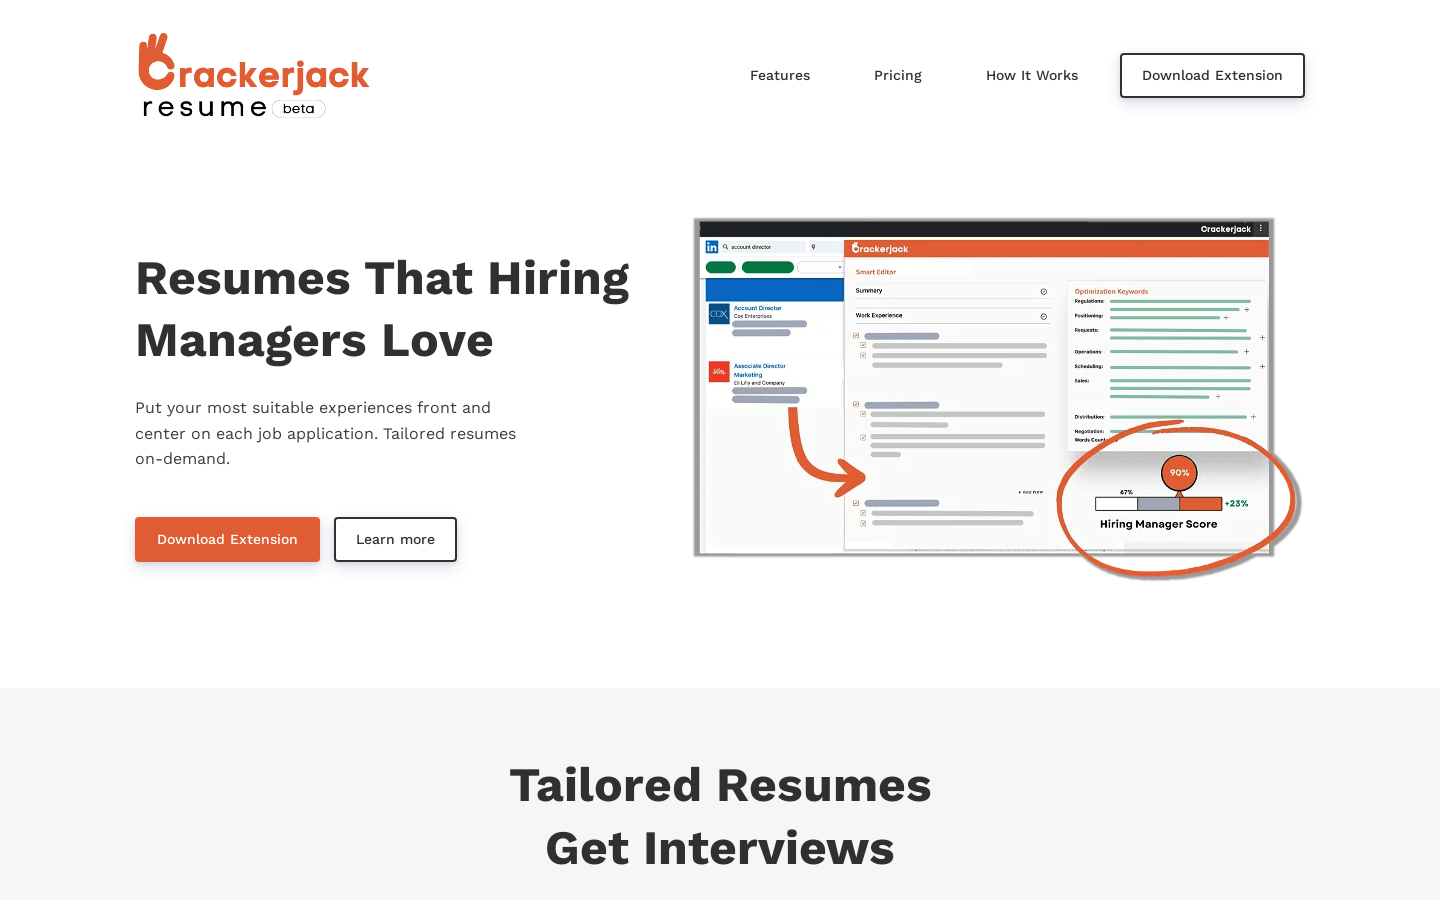 Crackerjack Resume